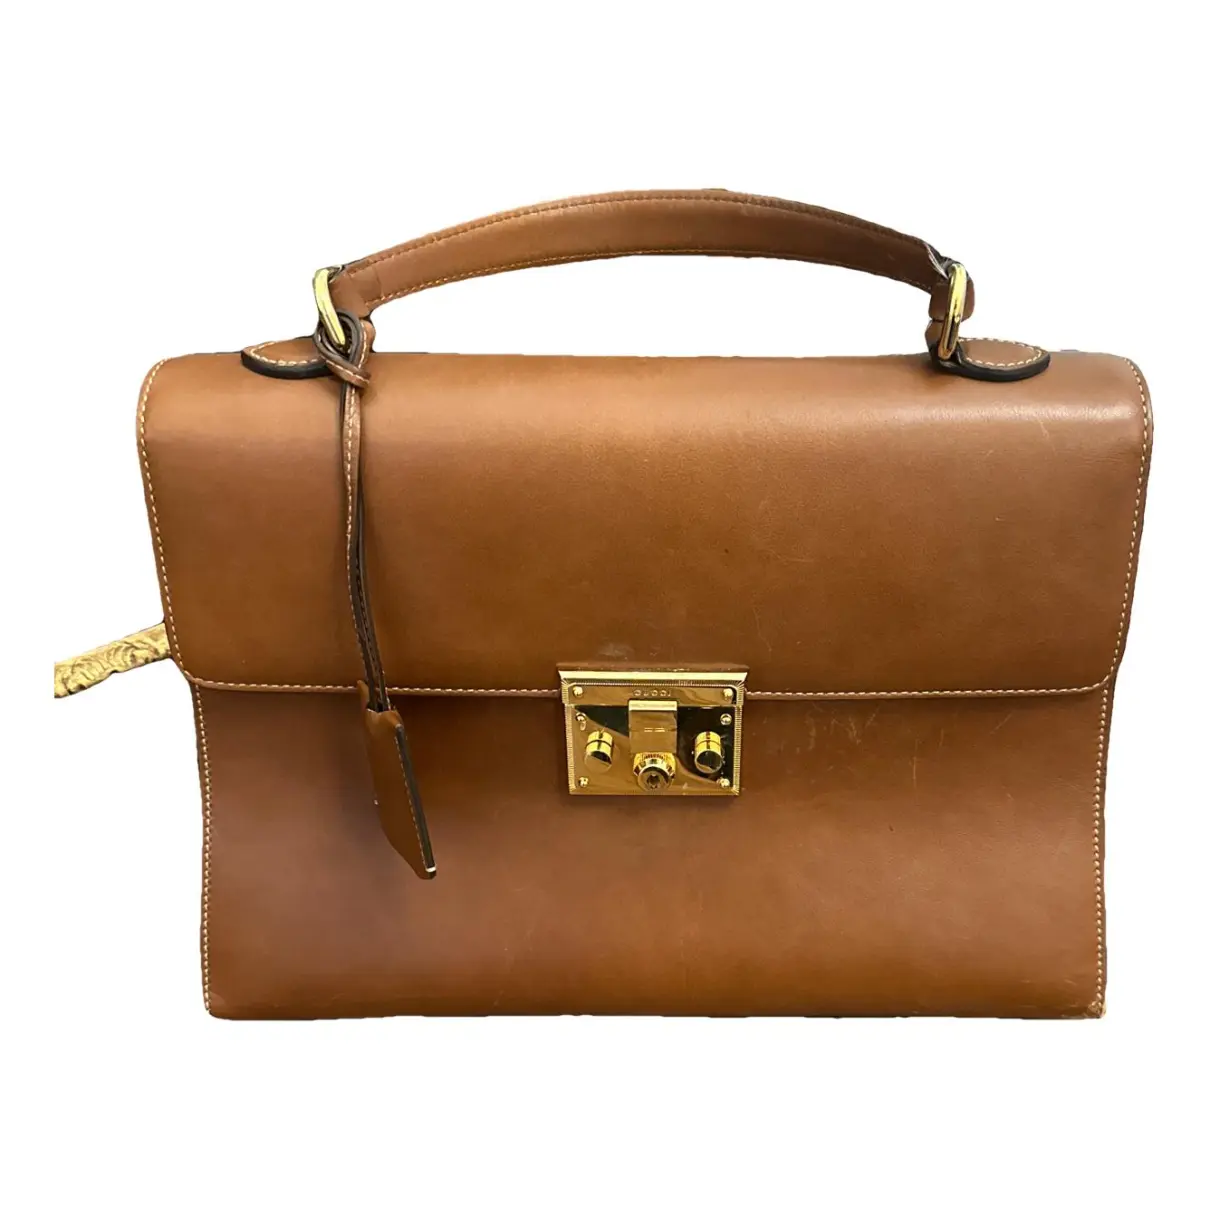 Padlock leather handbag